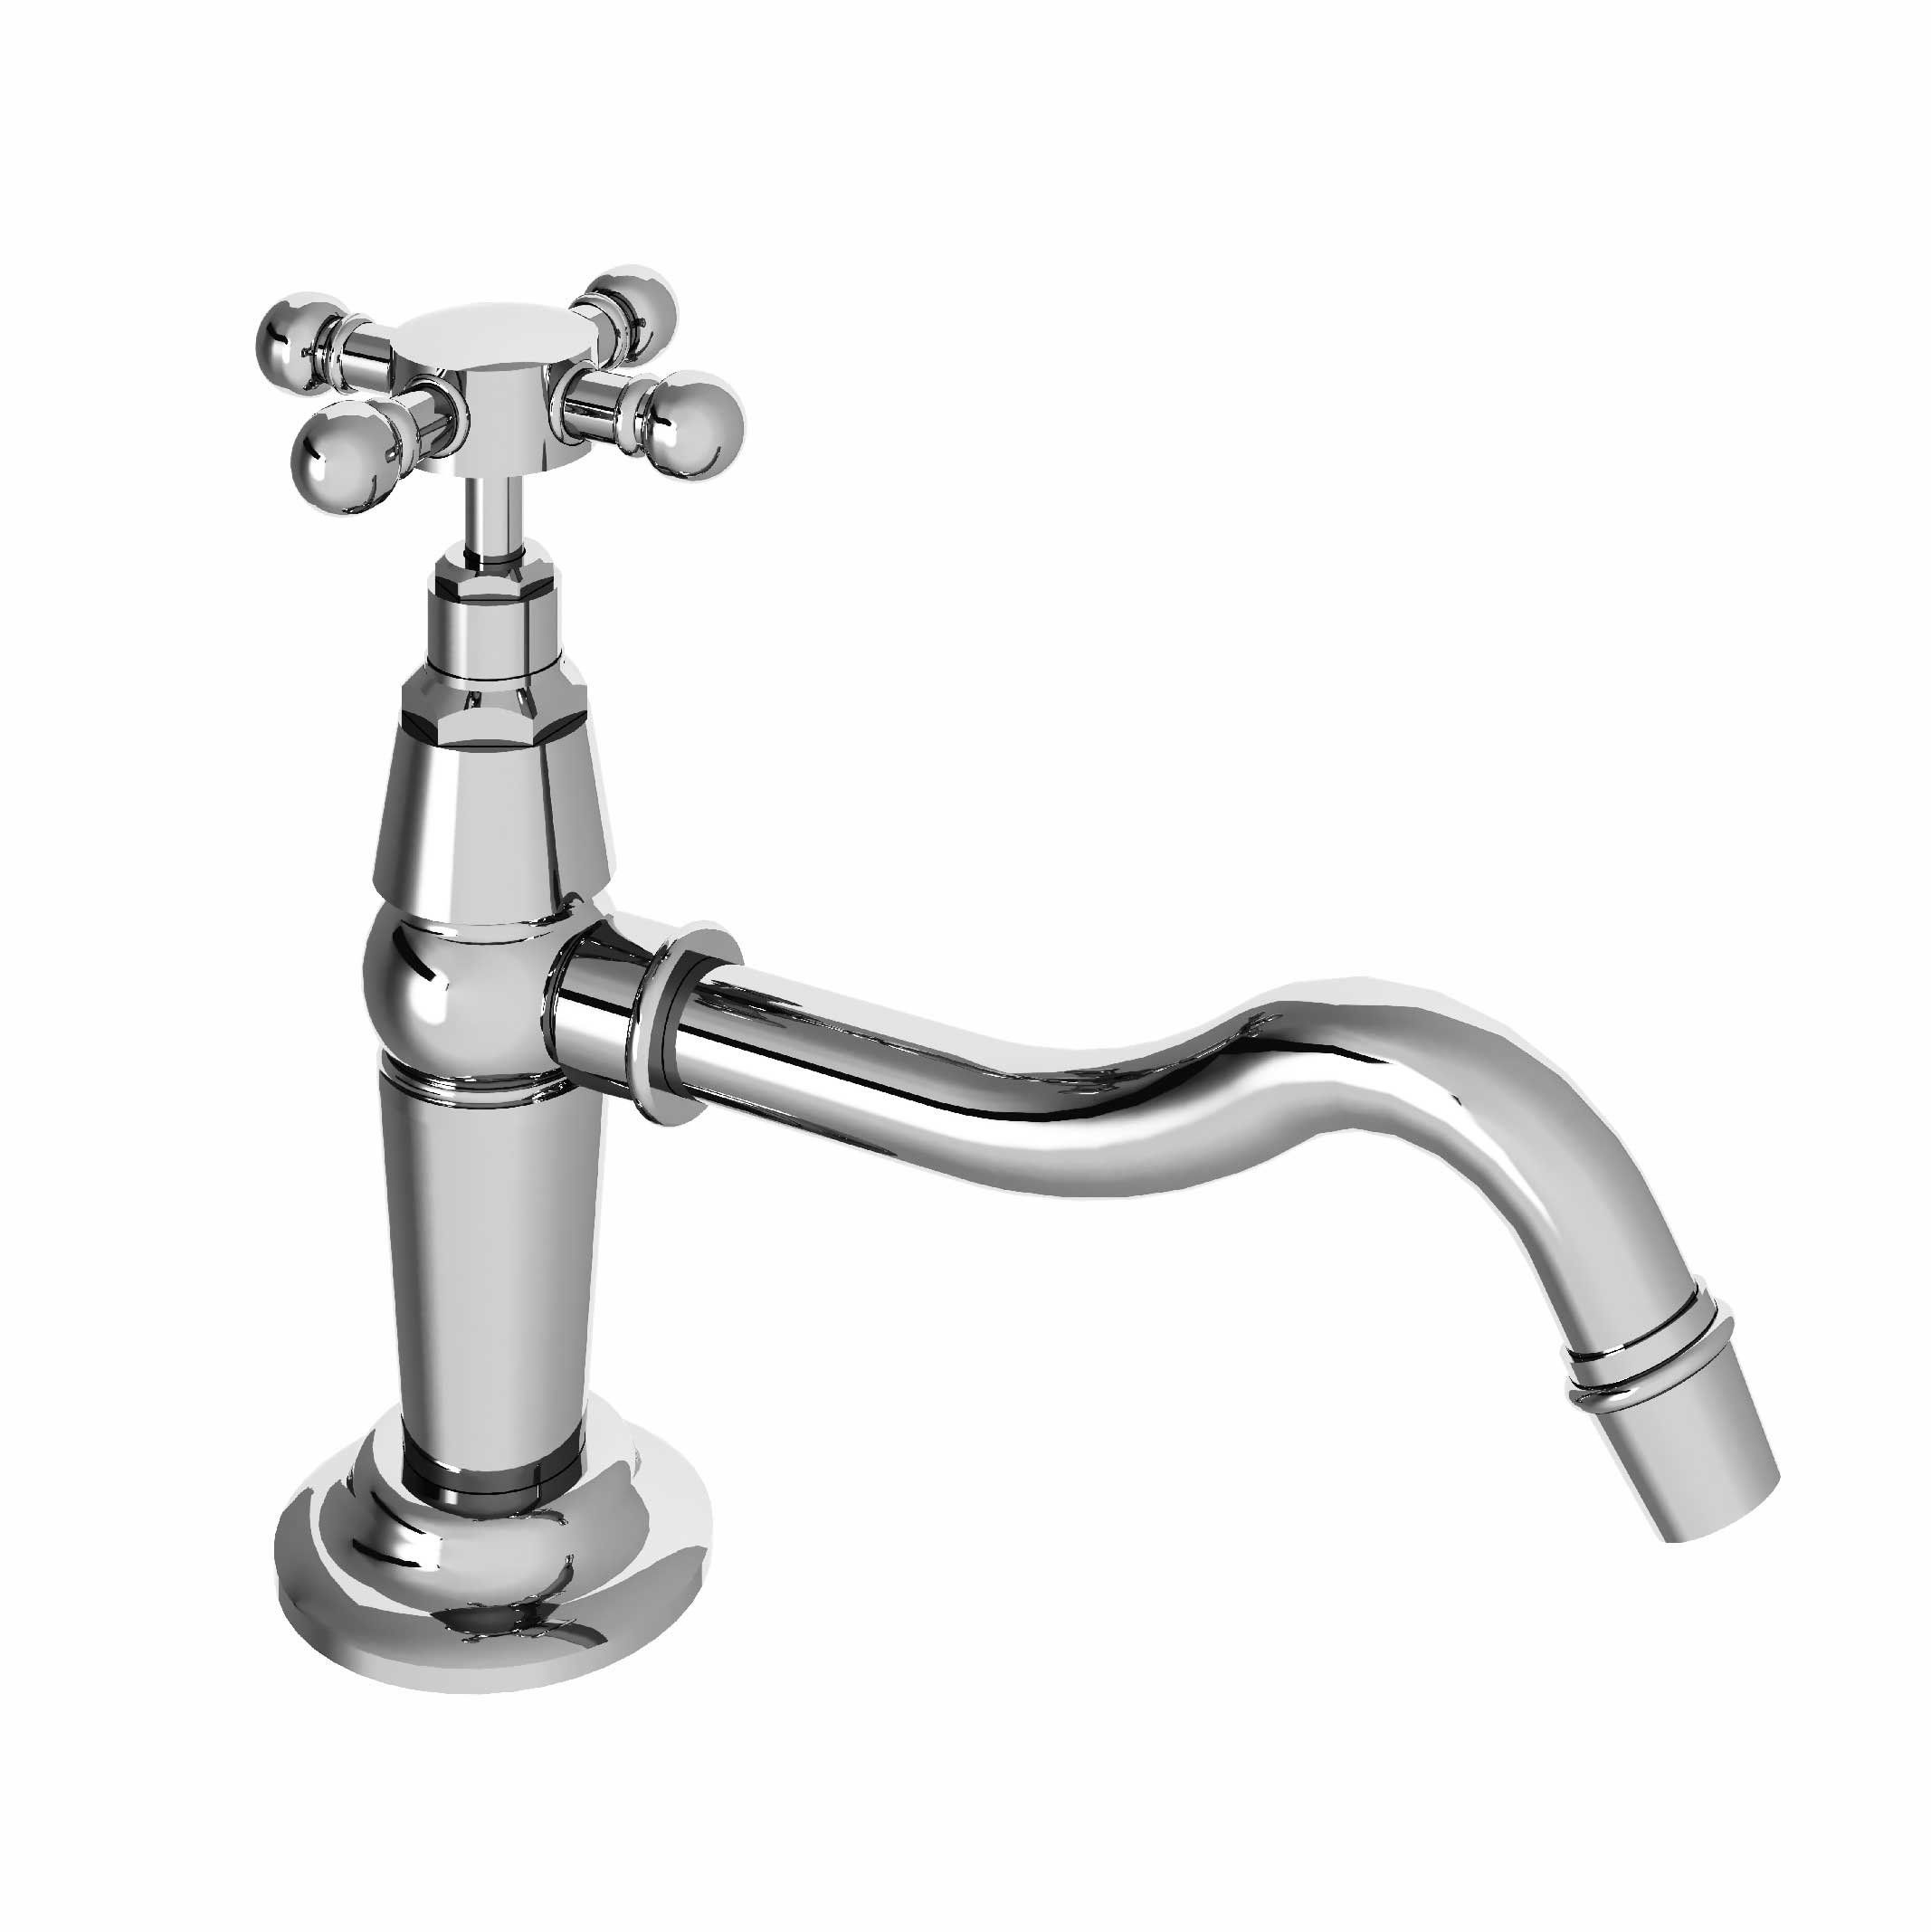 M04-4S1 Rim mounted wash-hand basin tap